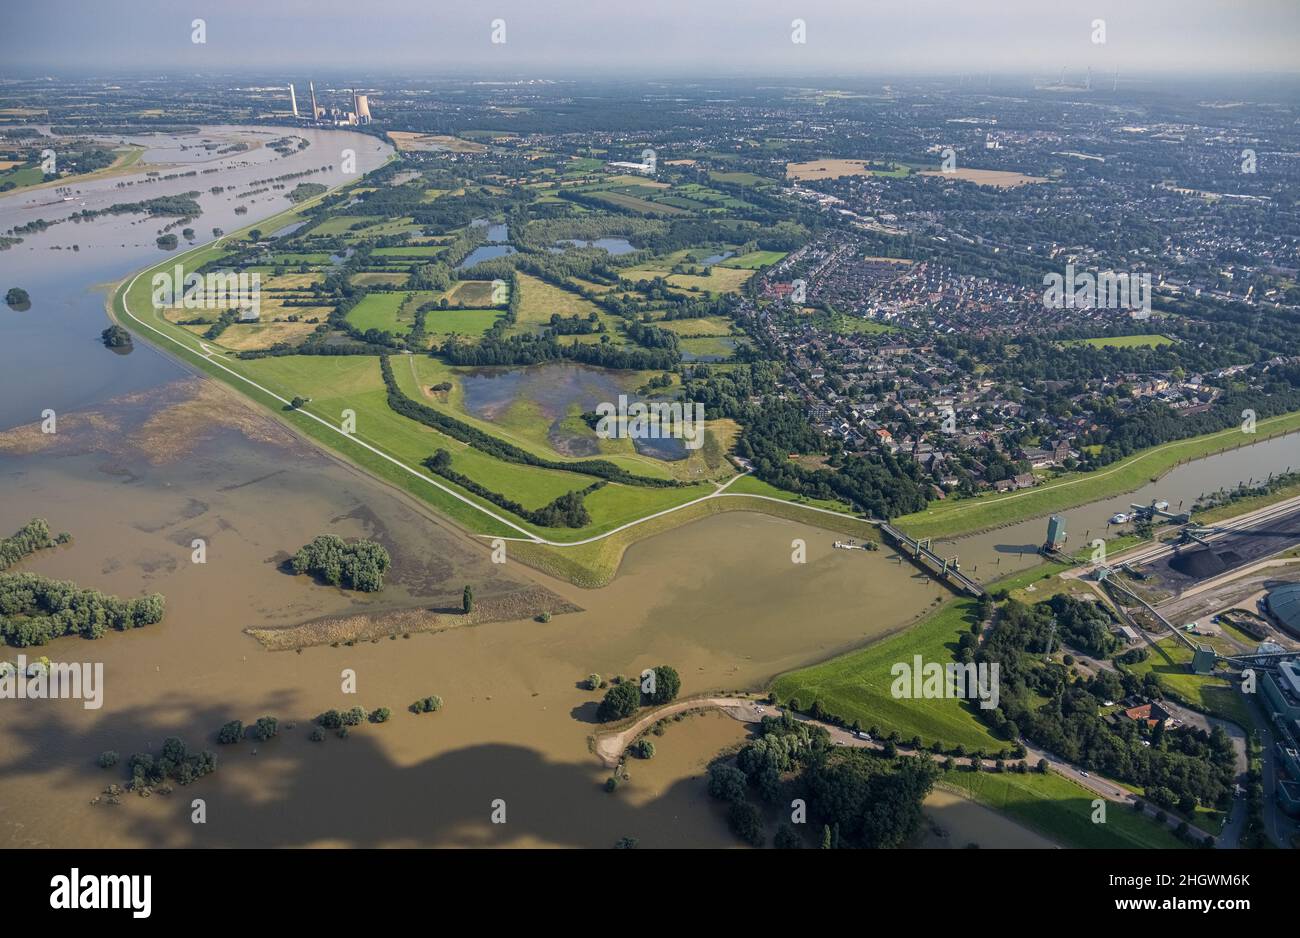 Vista aerea, alluvione del fiume Reno, Nordhafen Walsum, Rheinaue e Alt-Walsum in vista della centrale elettrica STEAG Voerde, Baerl, Duisburg, Ruhr, North RHI Foto Stock